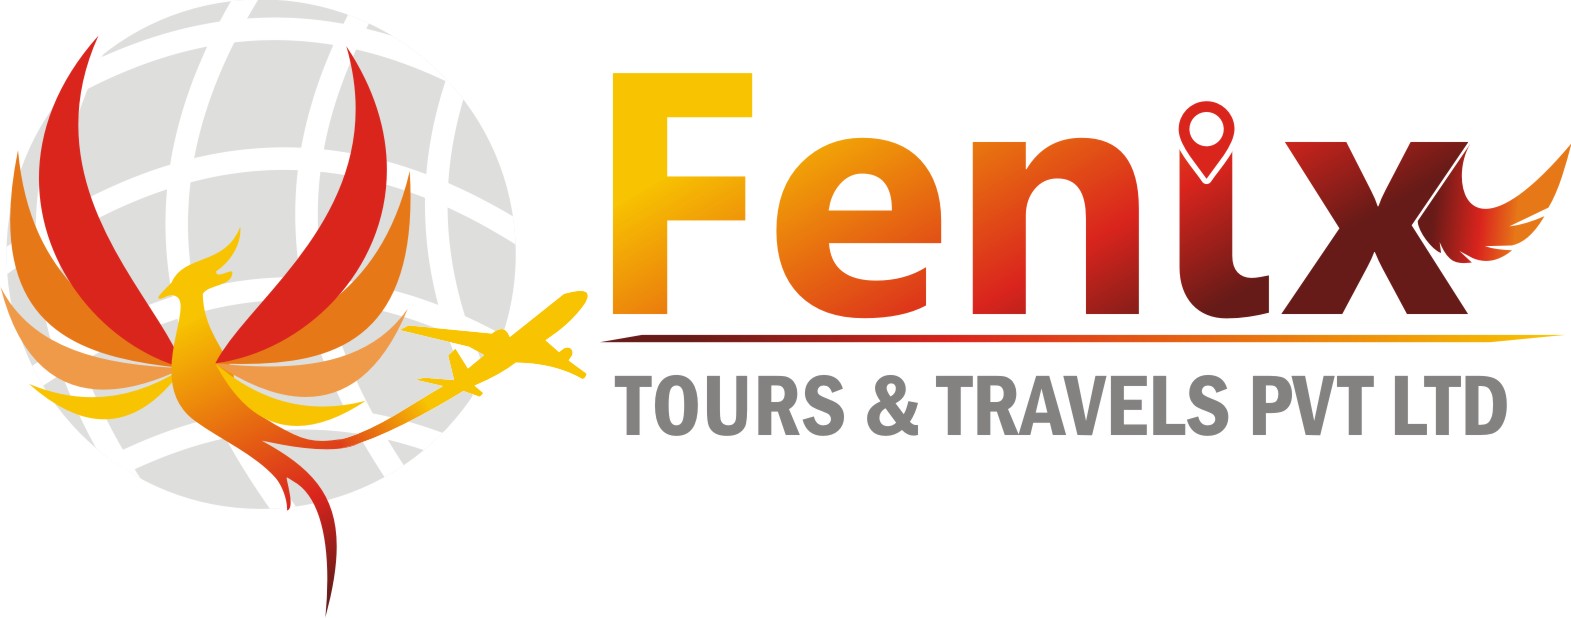 fenix travel agency